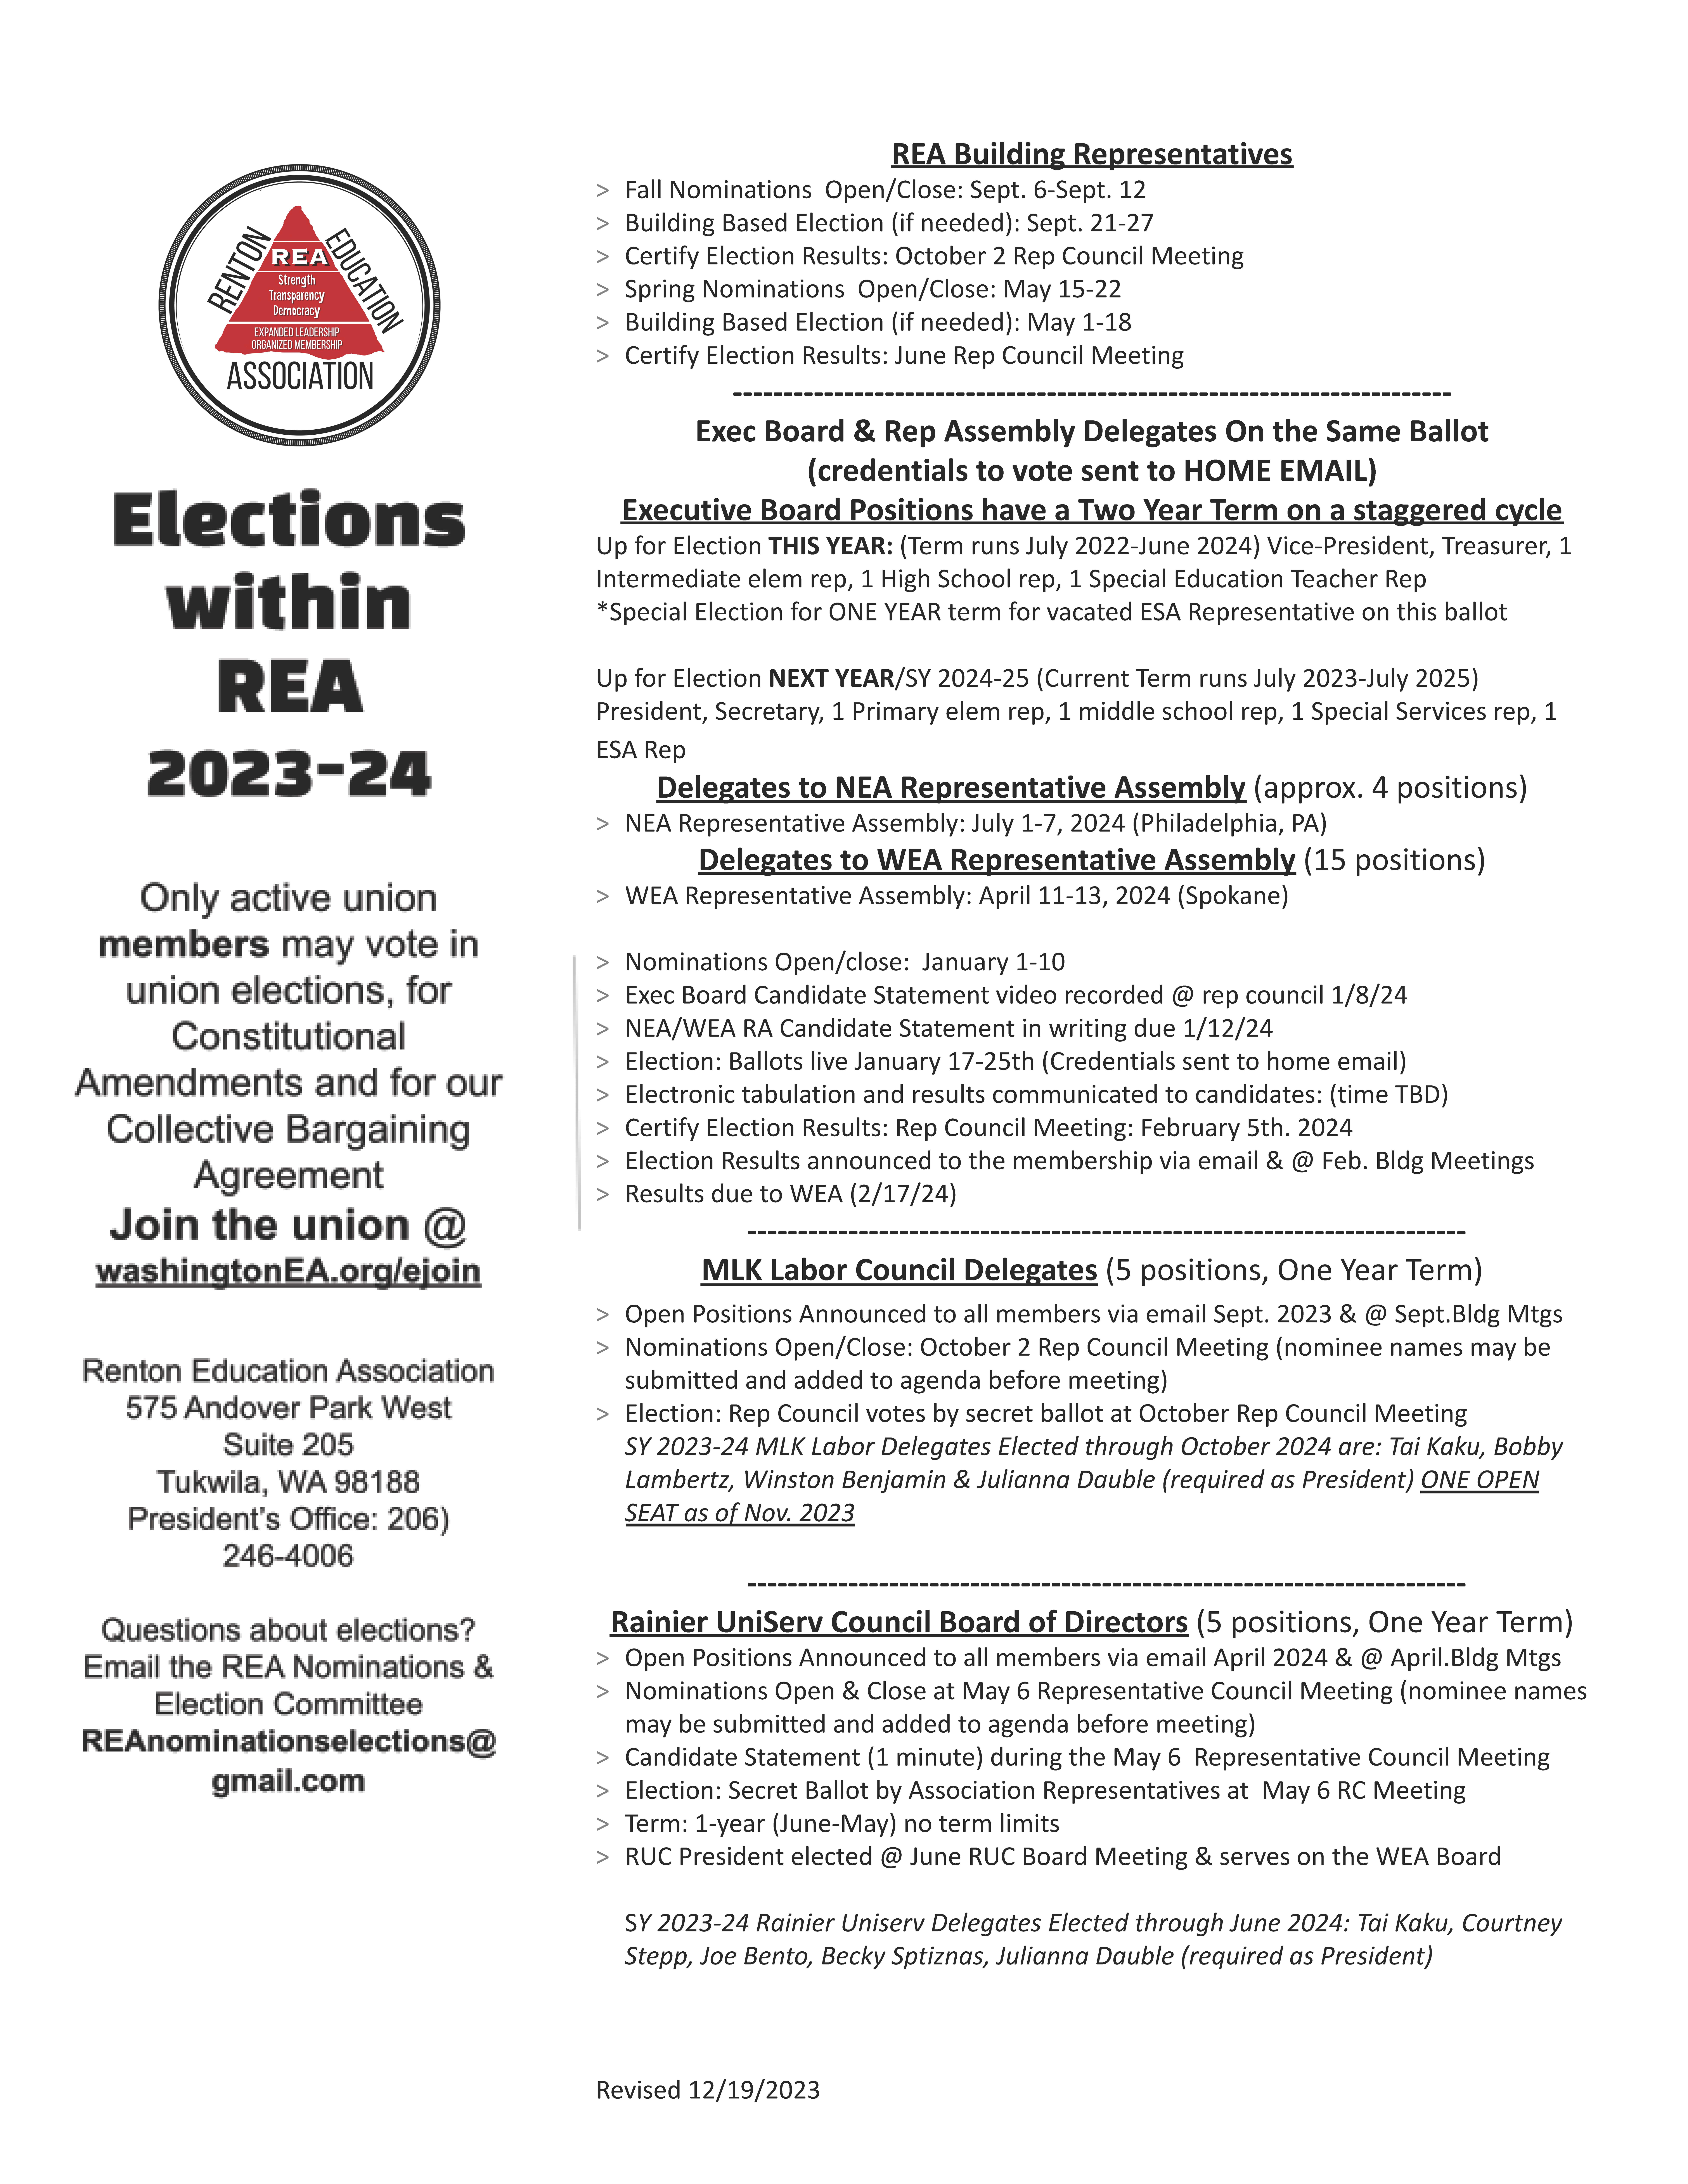 REA Elections Calendar (1) JPG 2023 2024